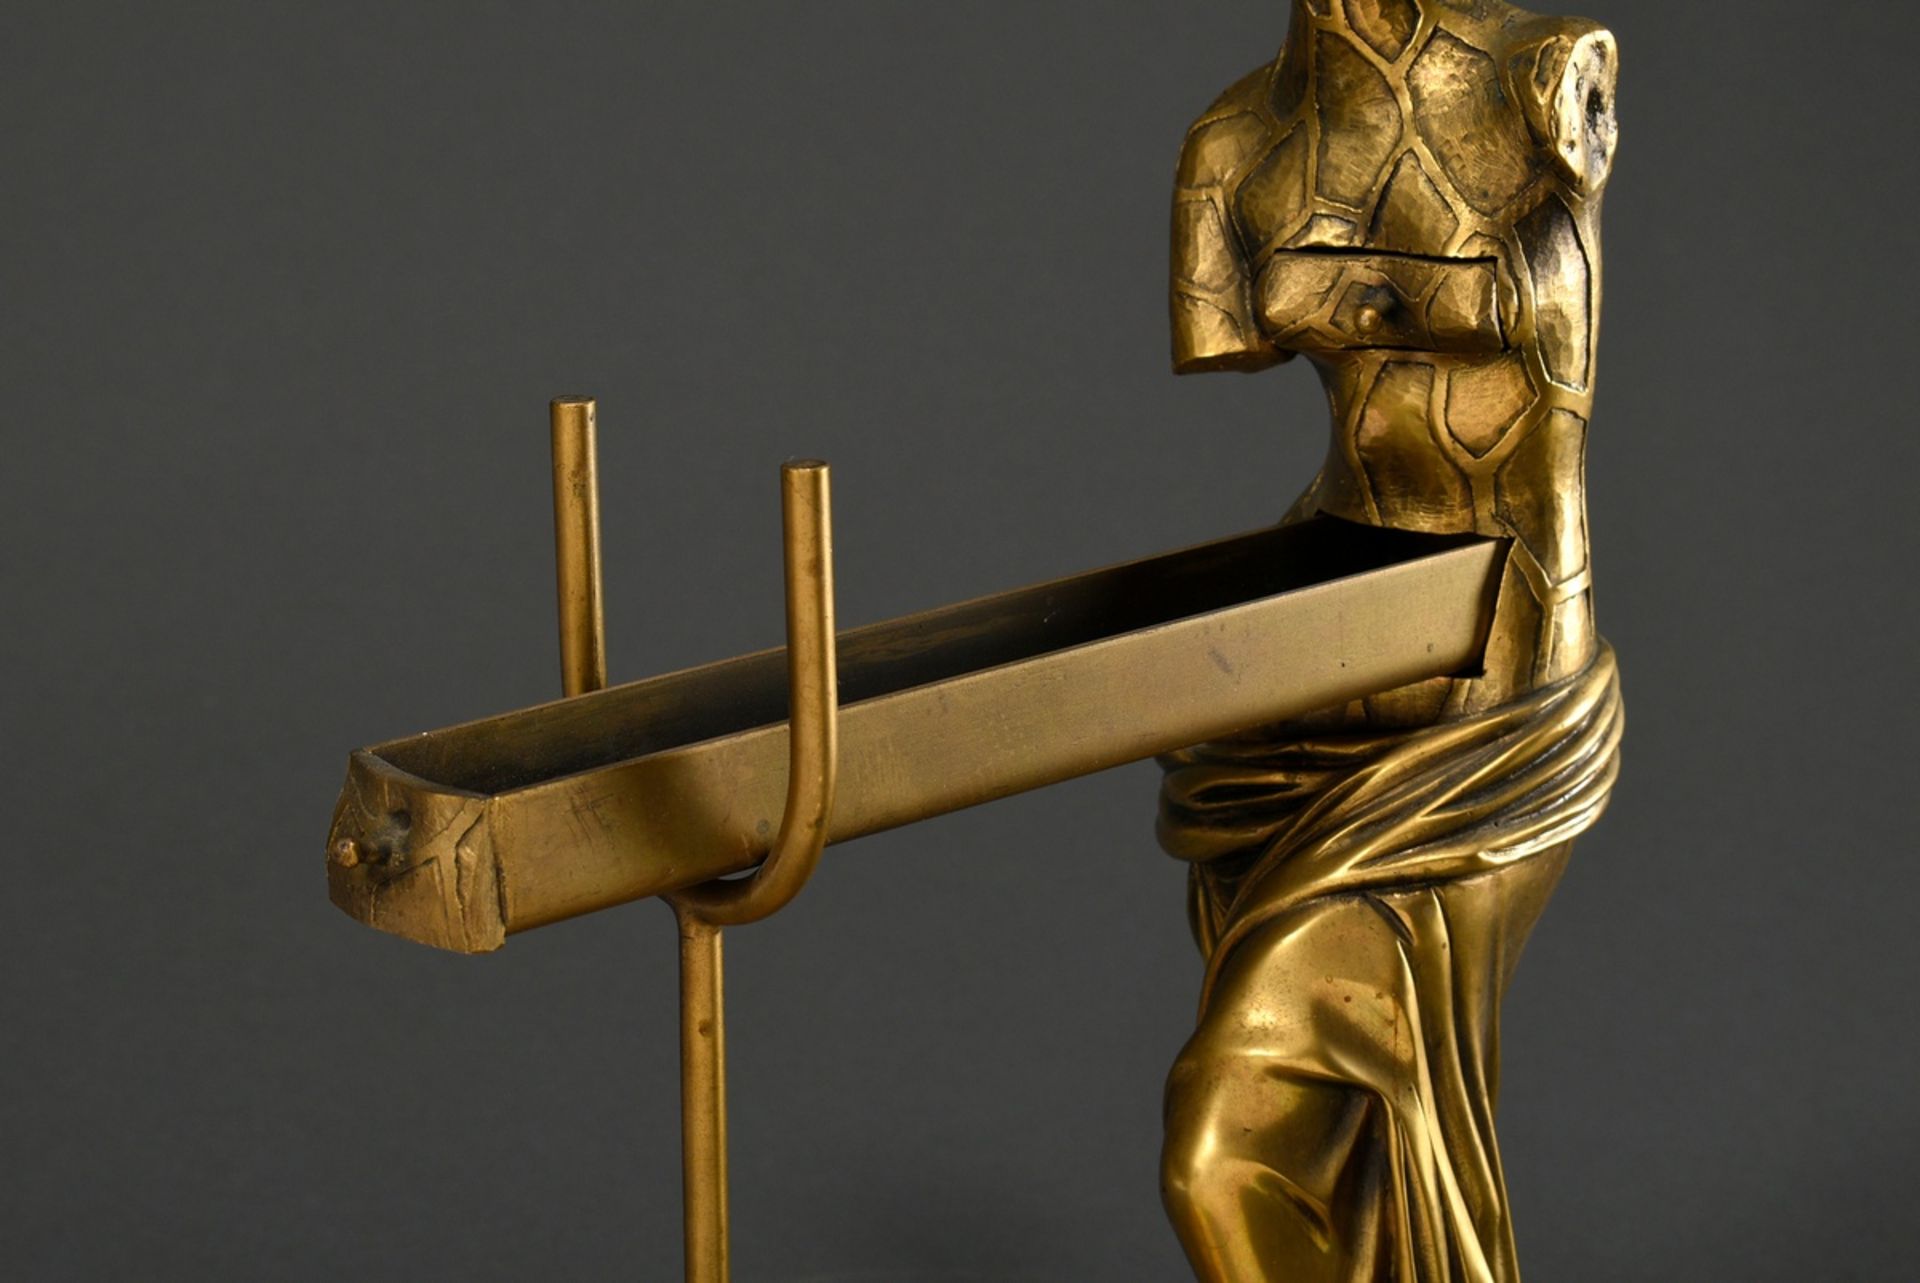 Dalí, Salvador (1904-1989) "Venus à la giraffe", bronze, golden patinated, with movable elements, 1 - Image 4 of 10